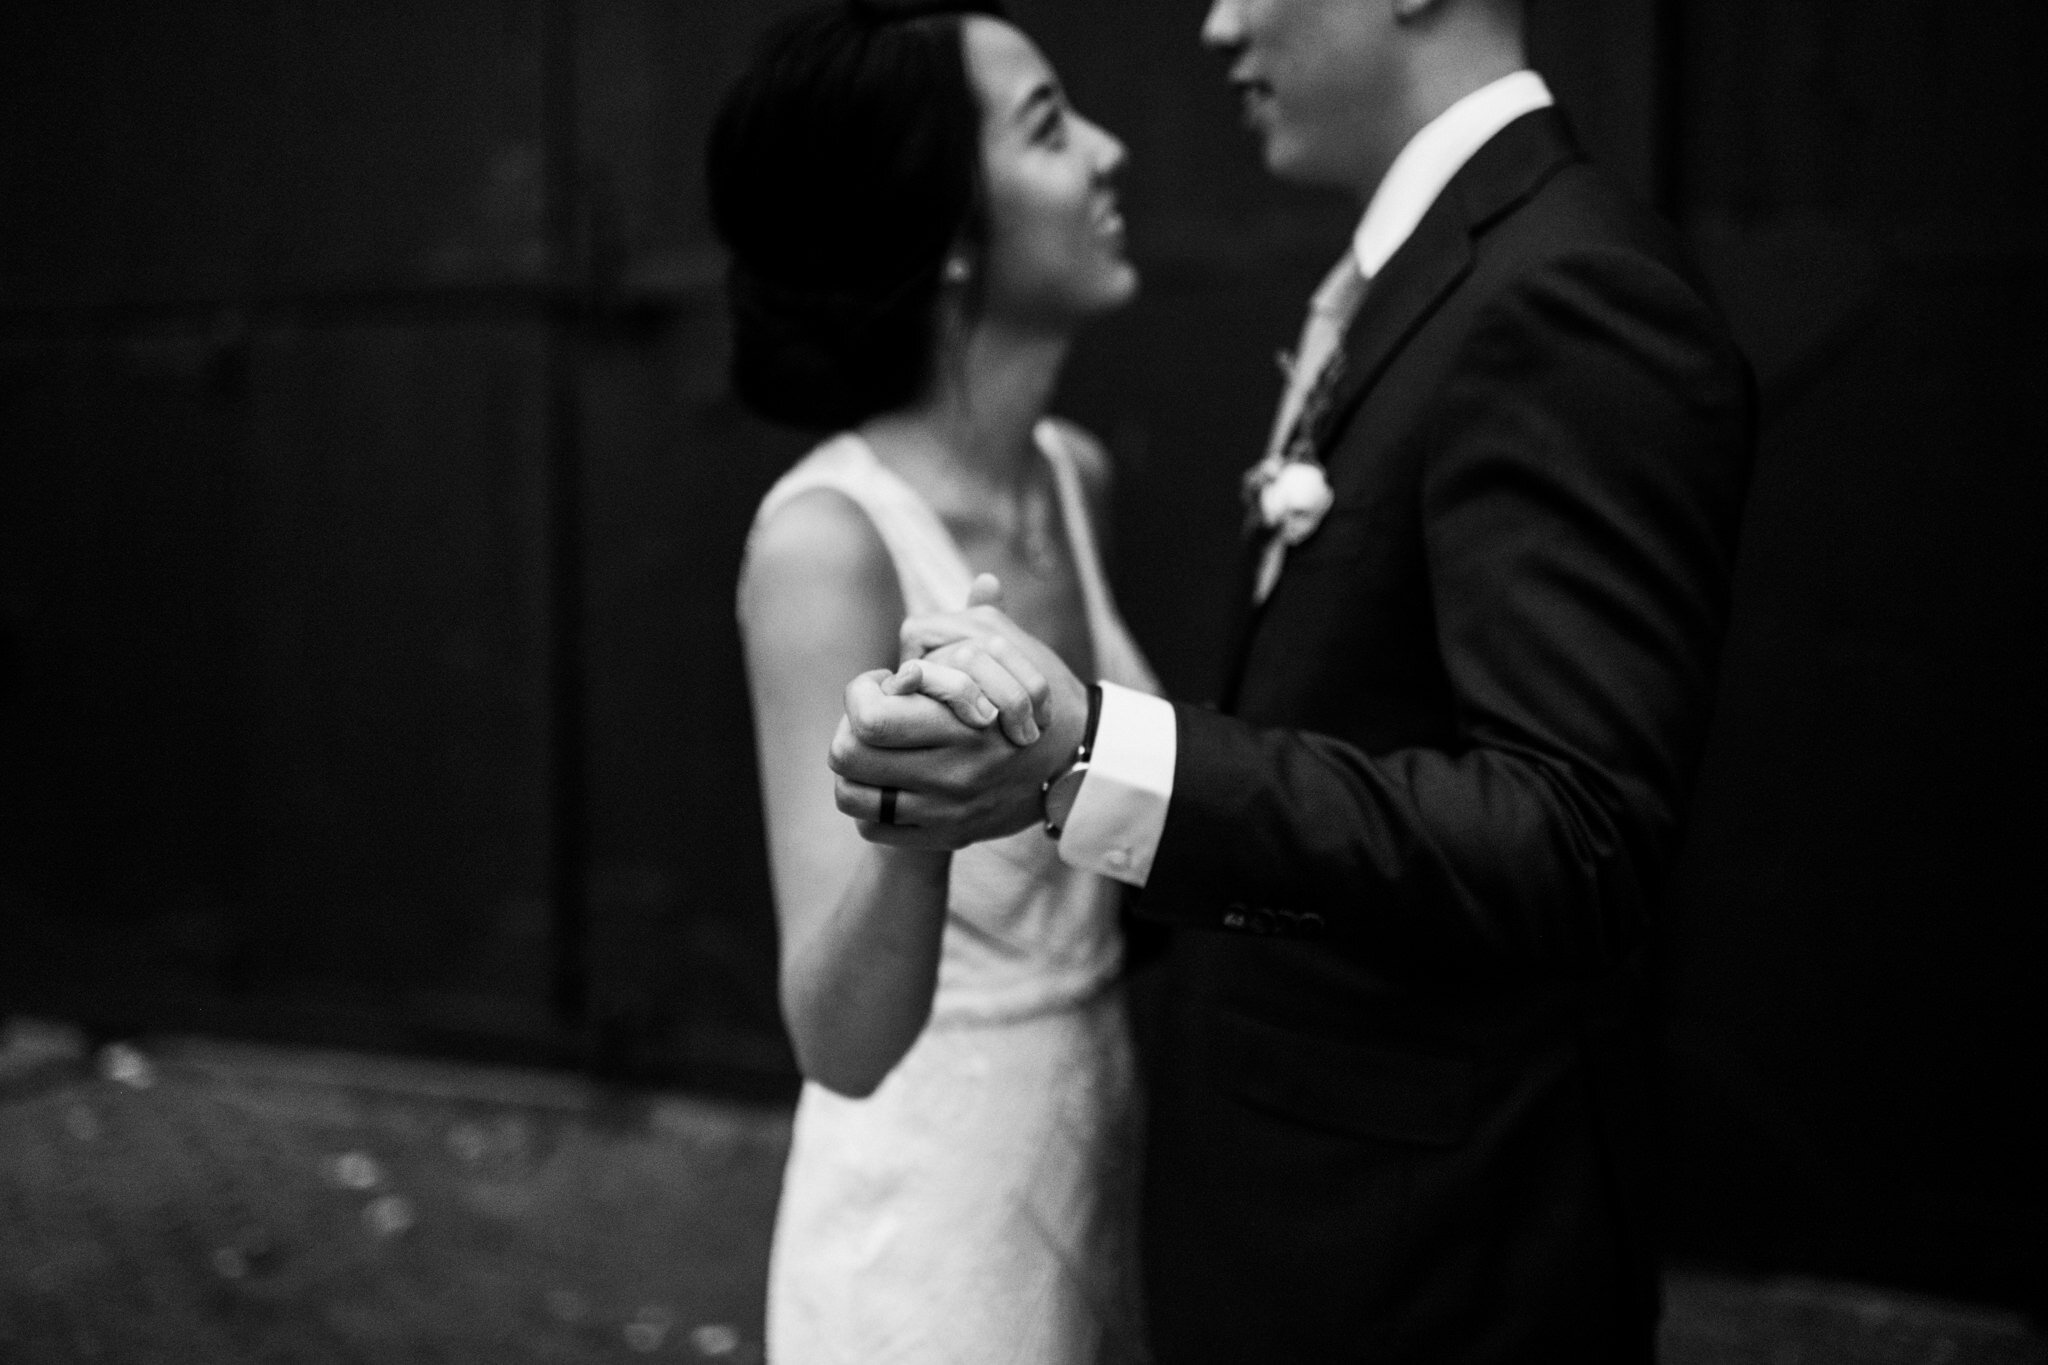 144-steamwhistle-wedding-toronto-reception-bride-groom-couple-photos-documentary.jpg